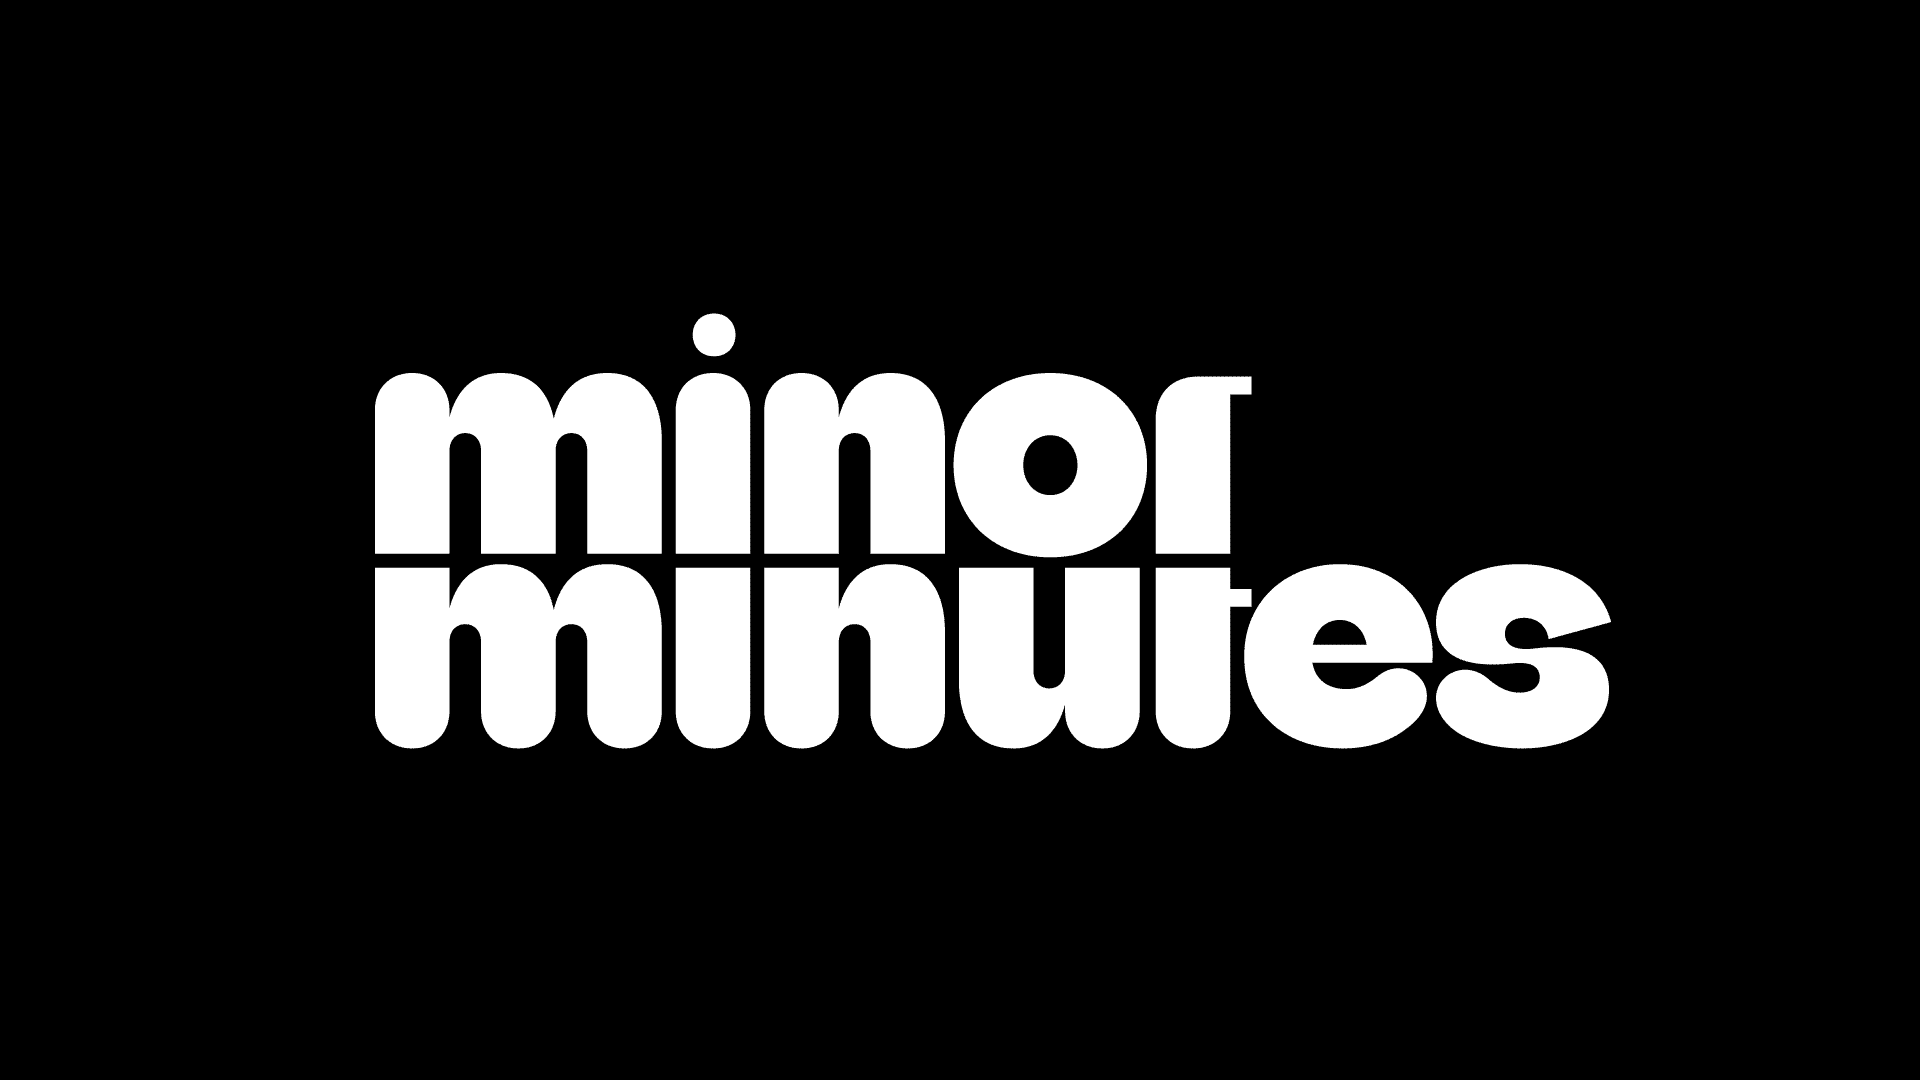 Branding: Minor Minutes